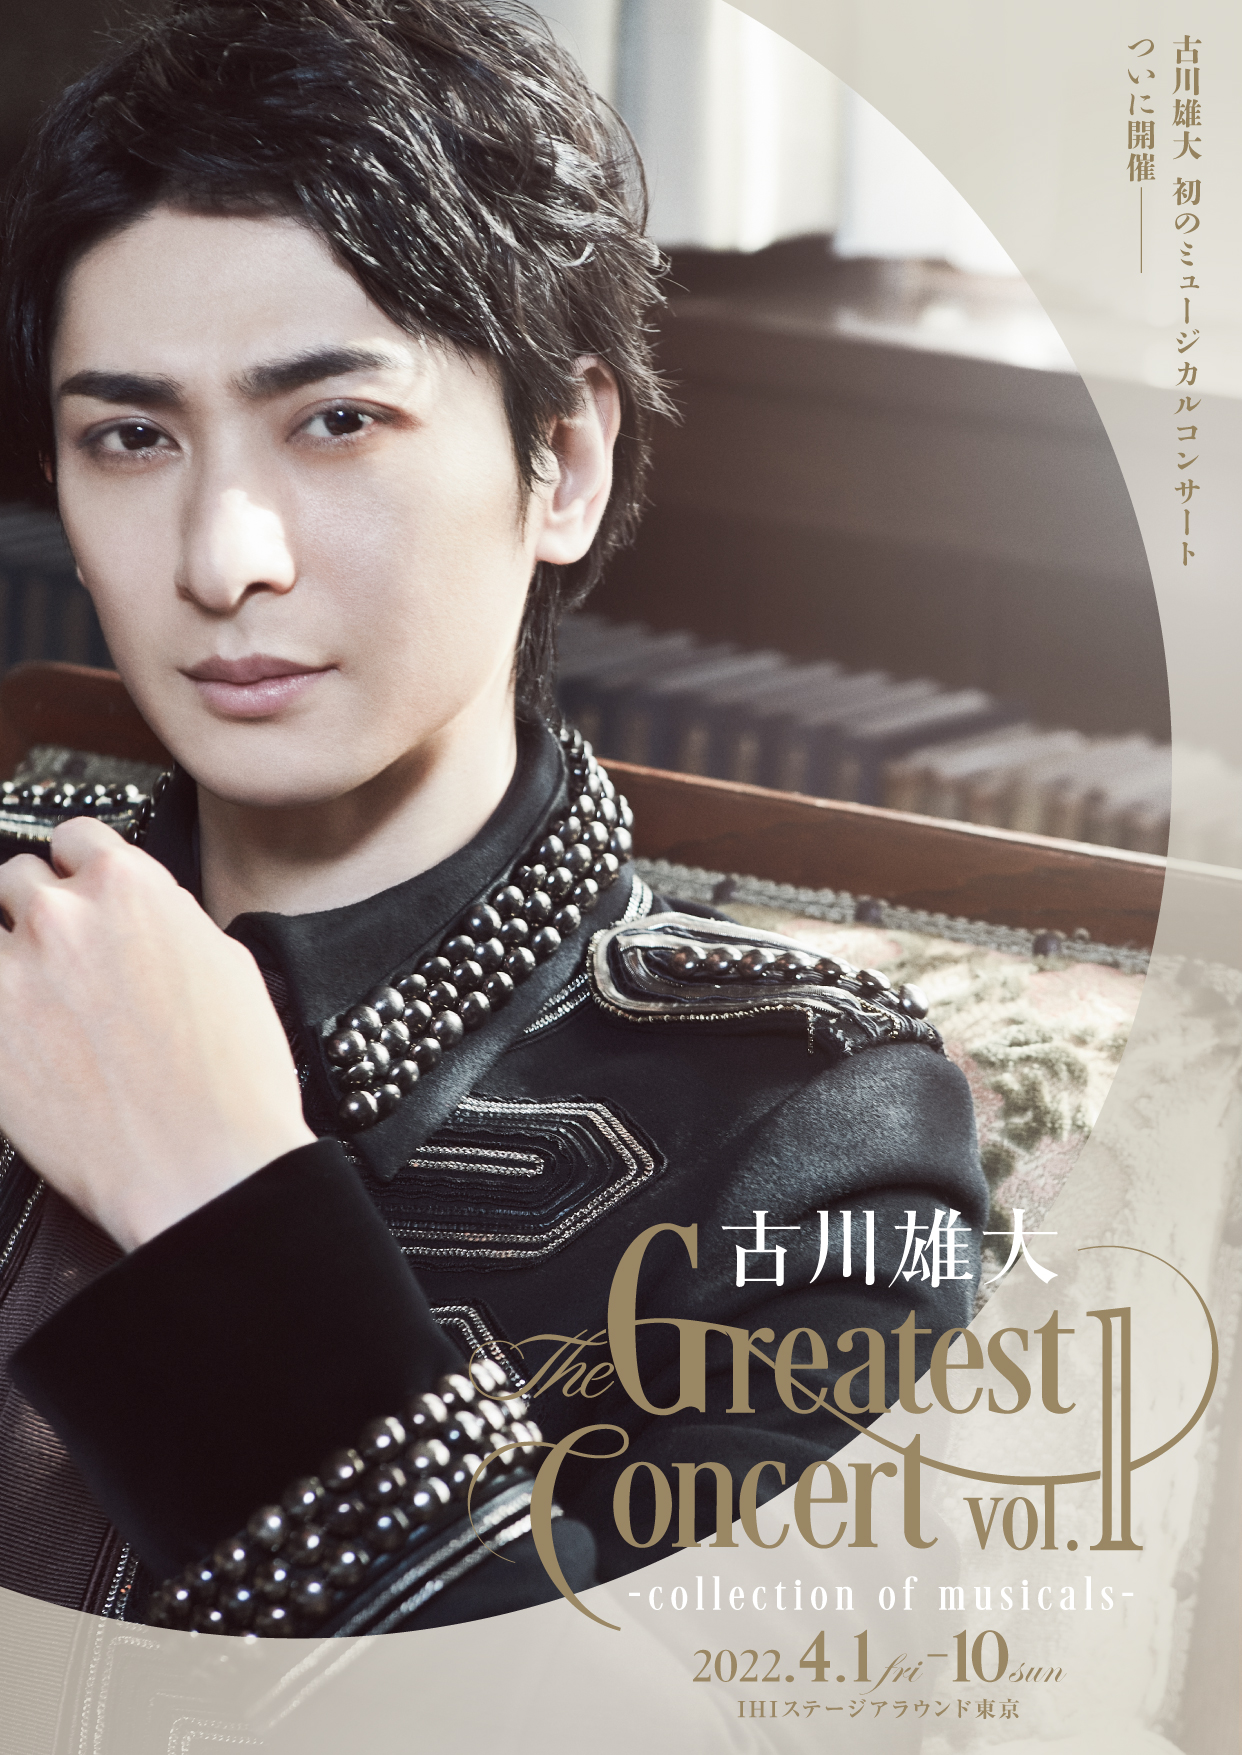 DVD/ブルーレイ古川雄大 The Greatest concert vol.1本・音楽・ゲーム